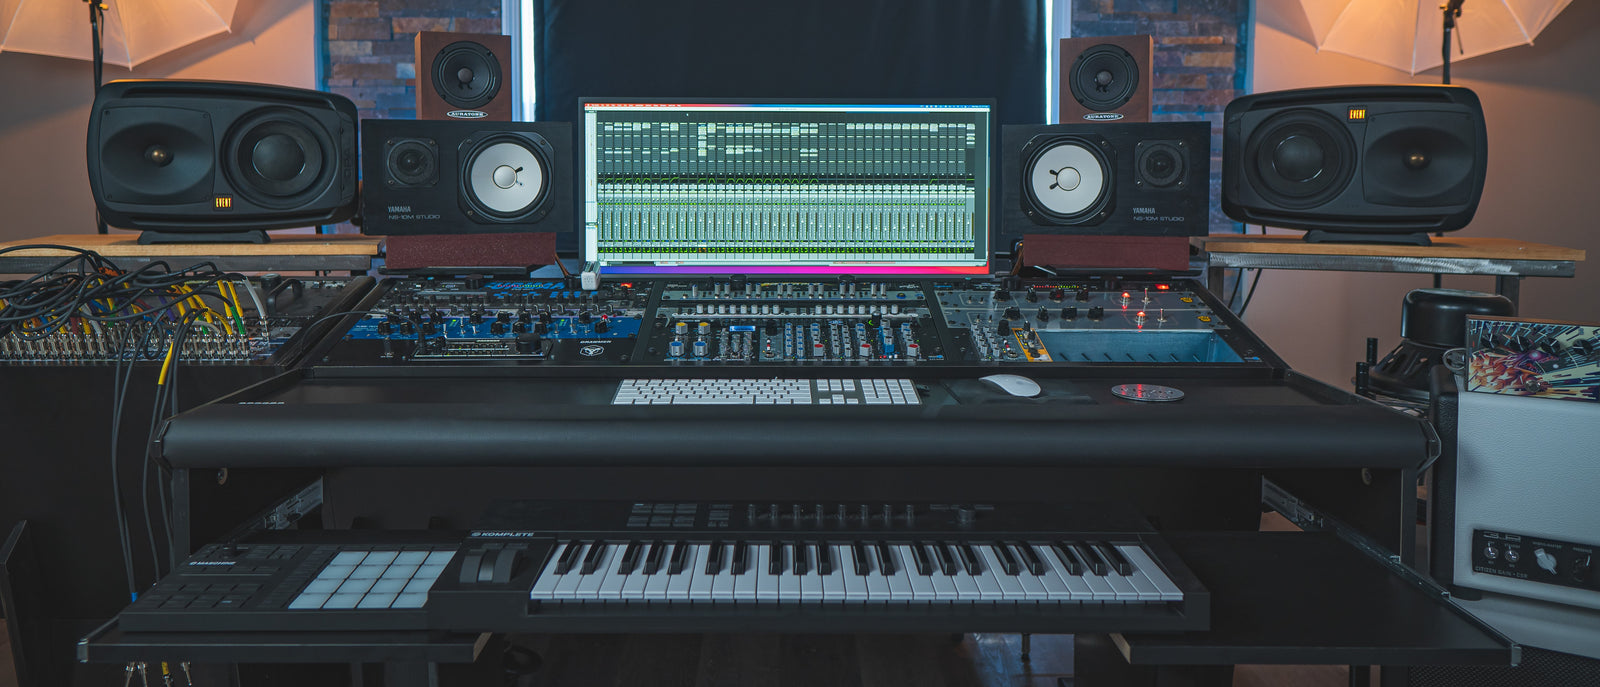 Music Desk, Computer Desk with Keyboard Tray, Studio Desk for Music  Production, Recording Studio Desk for Producer, Modern Work Study PC Desk  with